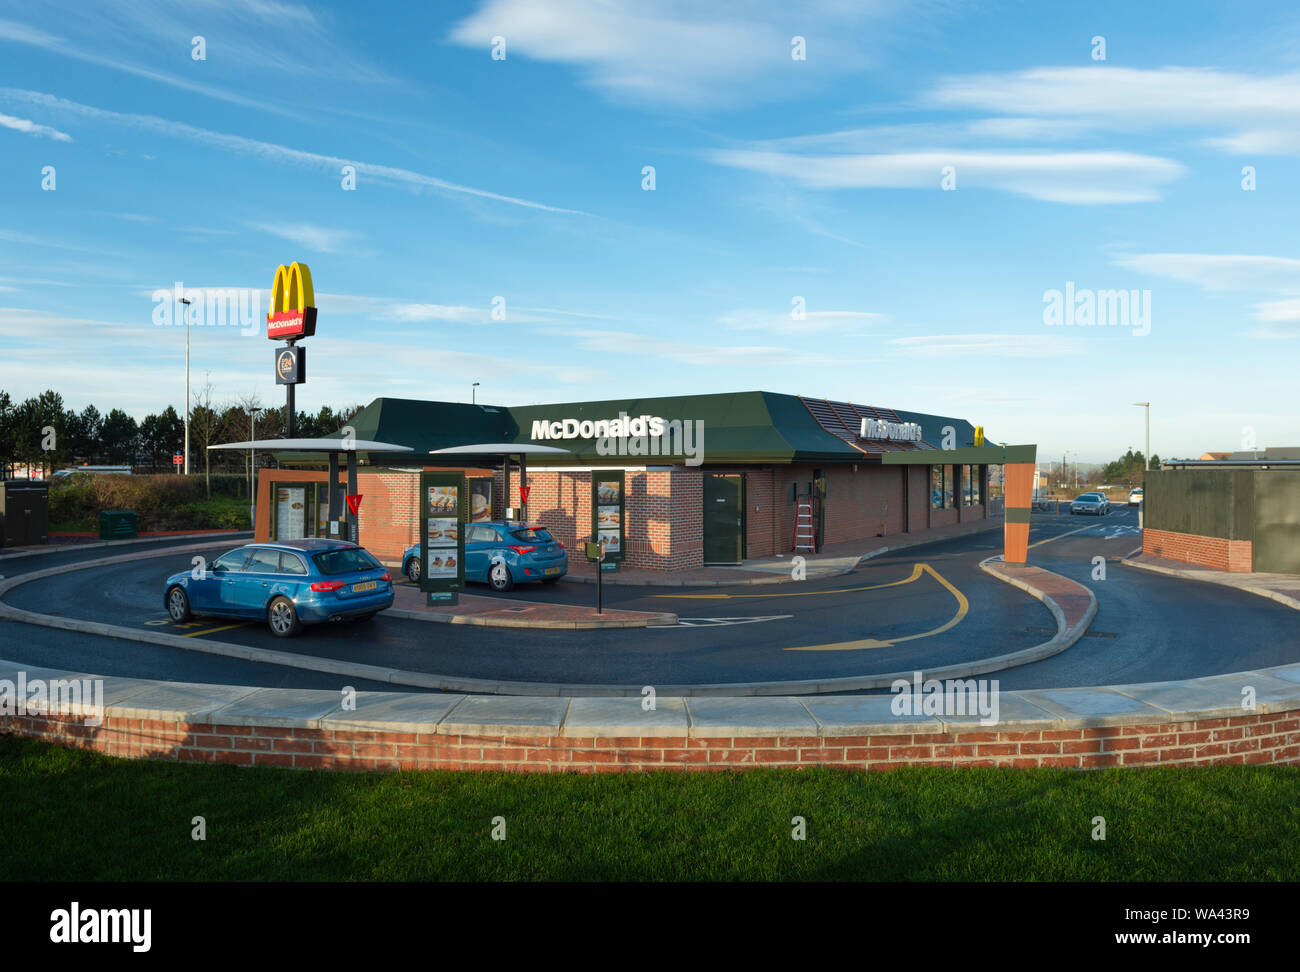 Coches esperando para ser servido comida para llevar en un restaurante de comida rápida McDonalds Foto de stock